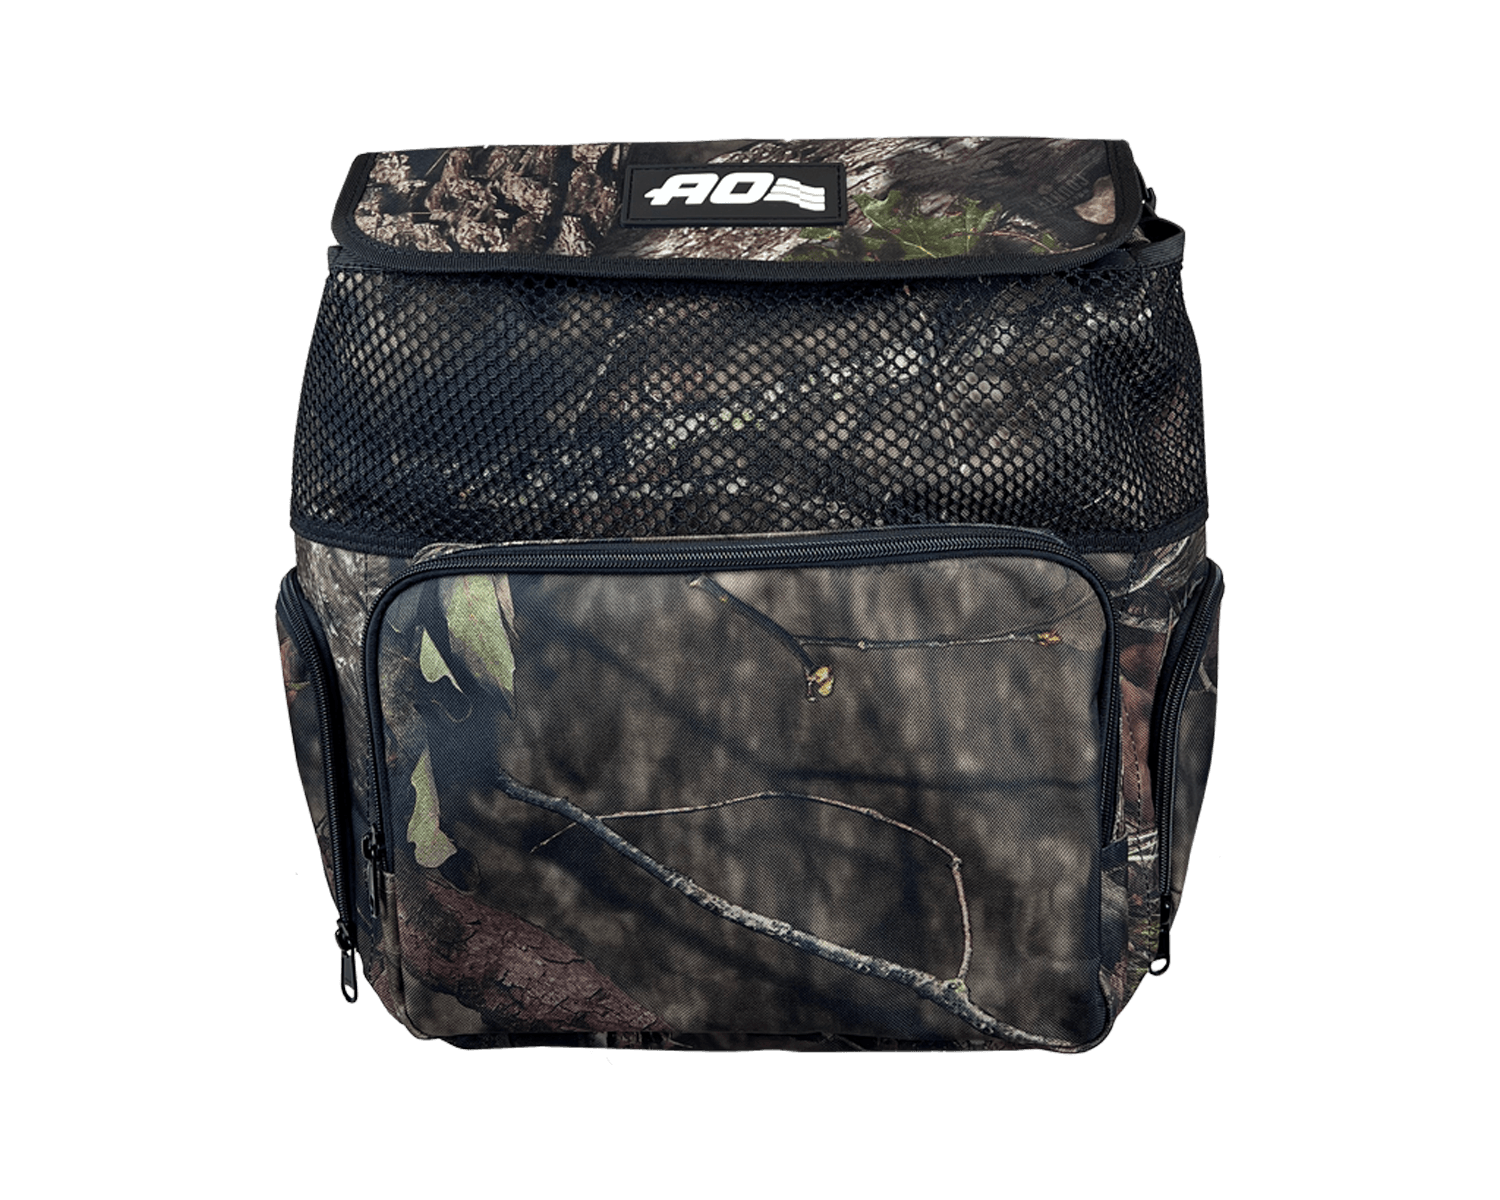 Mossy Oak Series Backpack: Groomsman Special - AO Coolers